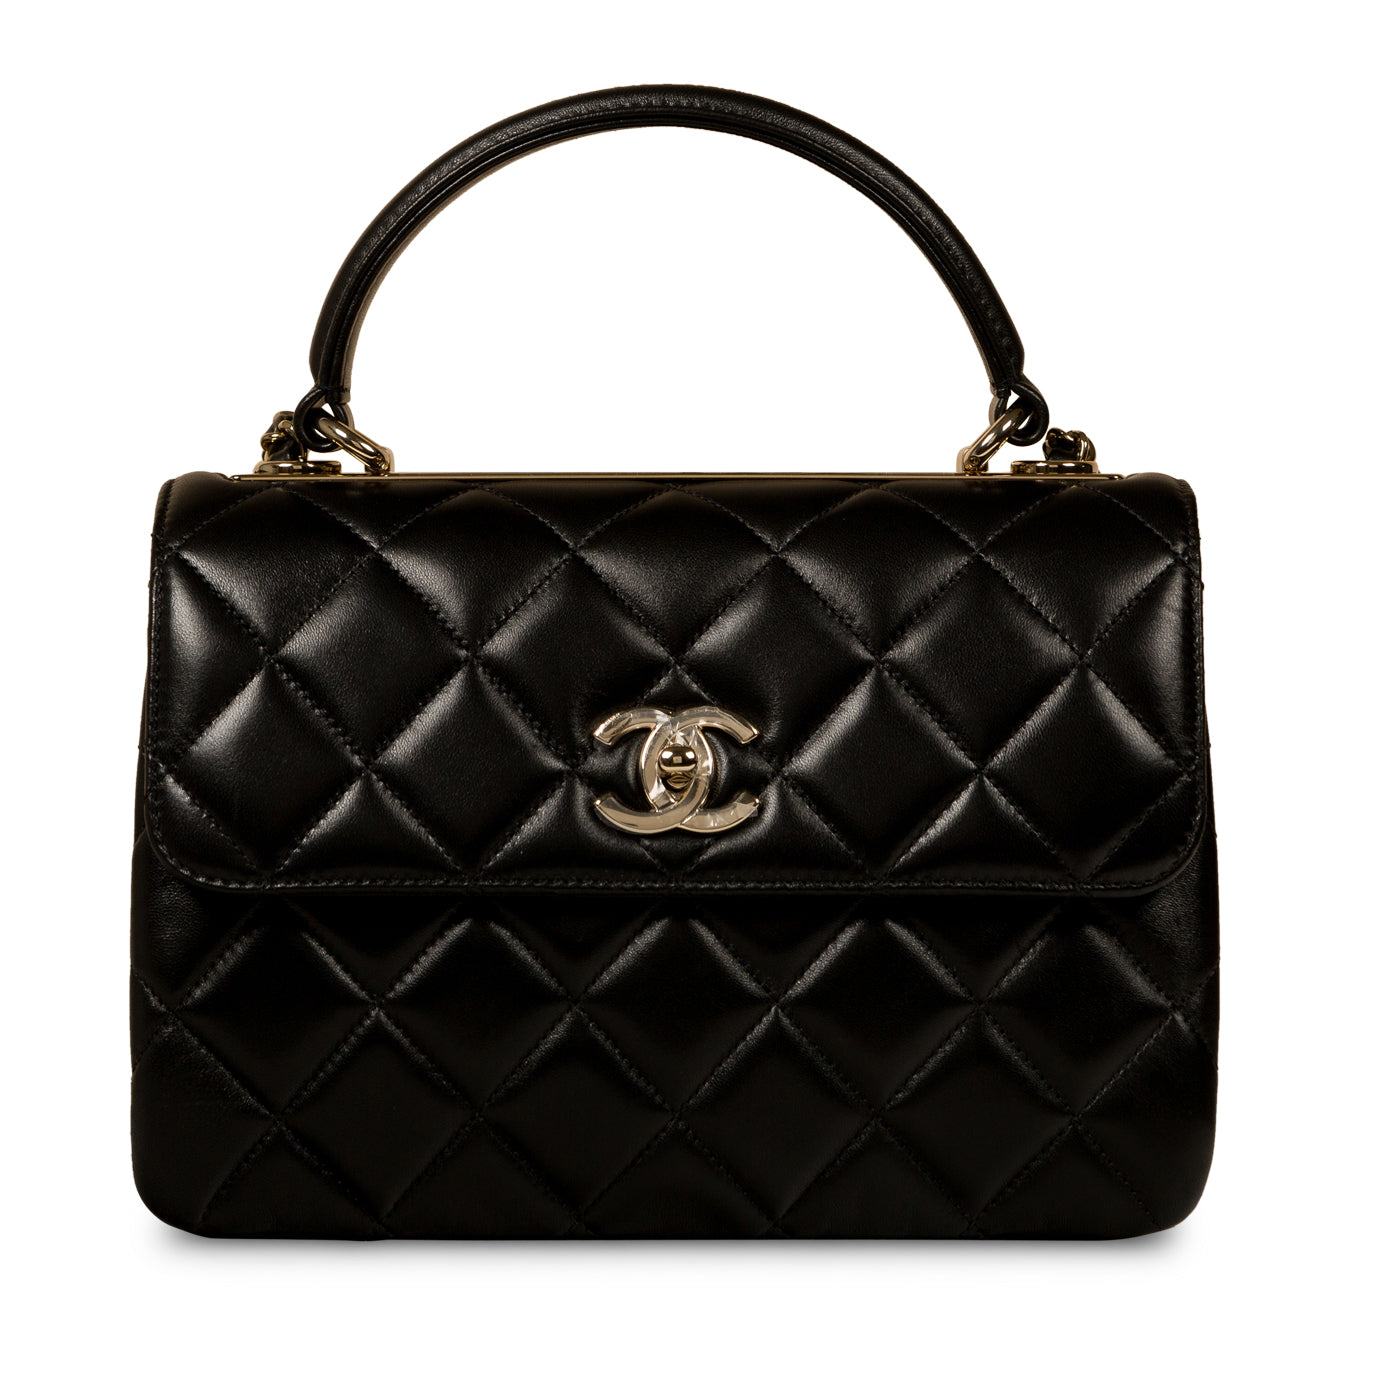 Chanel - Small Trendy CC Flap Bag - Brand New - Black Lambskin